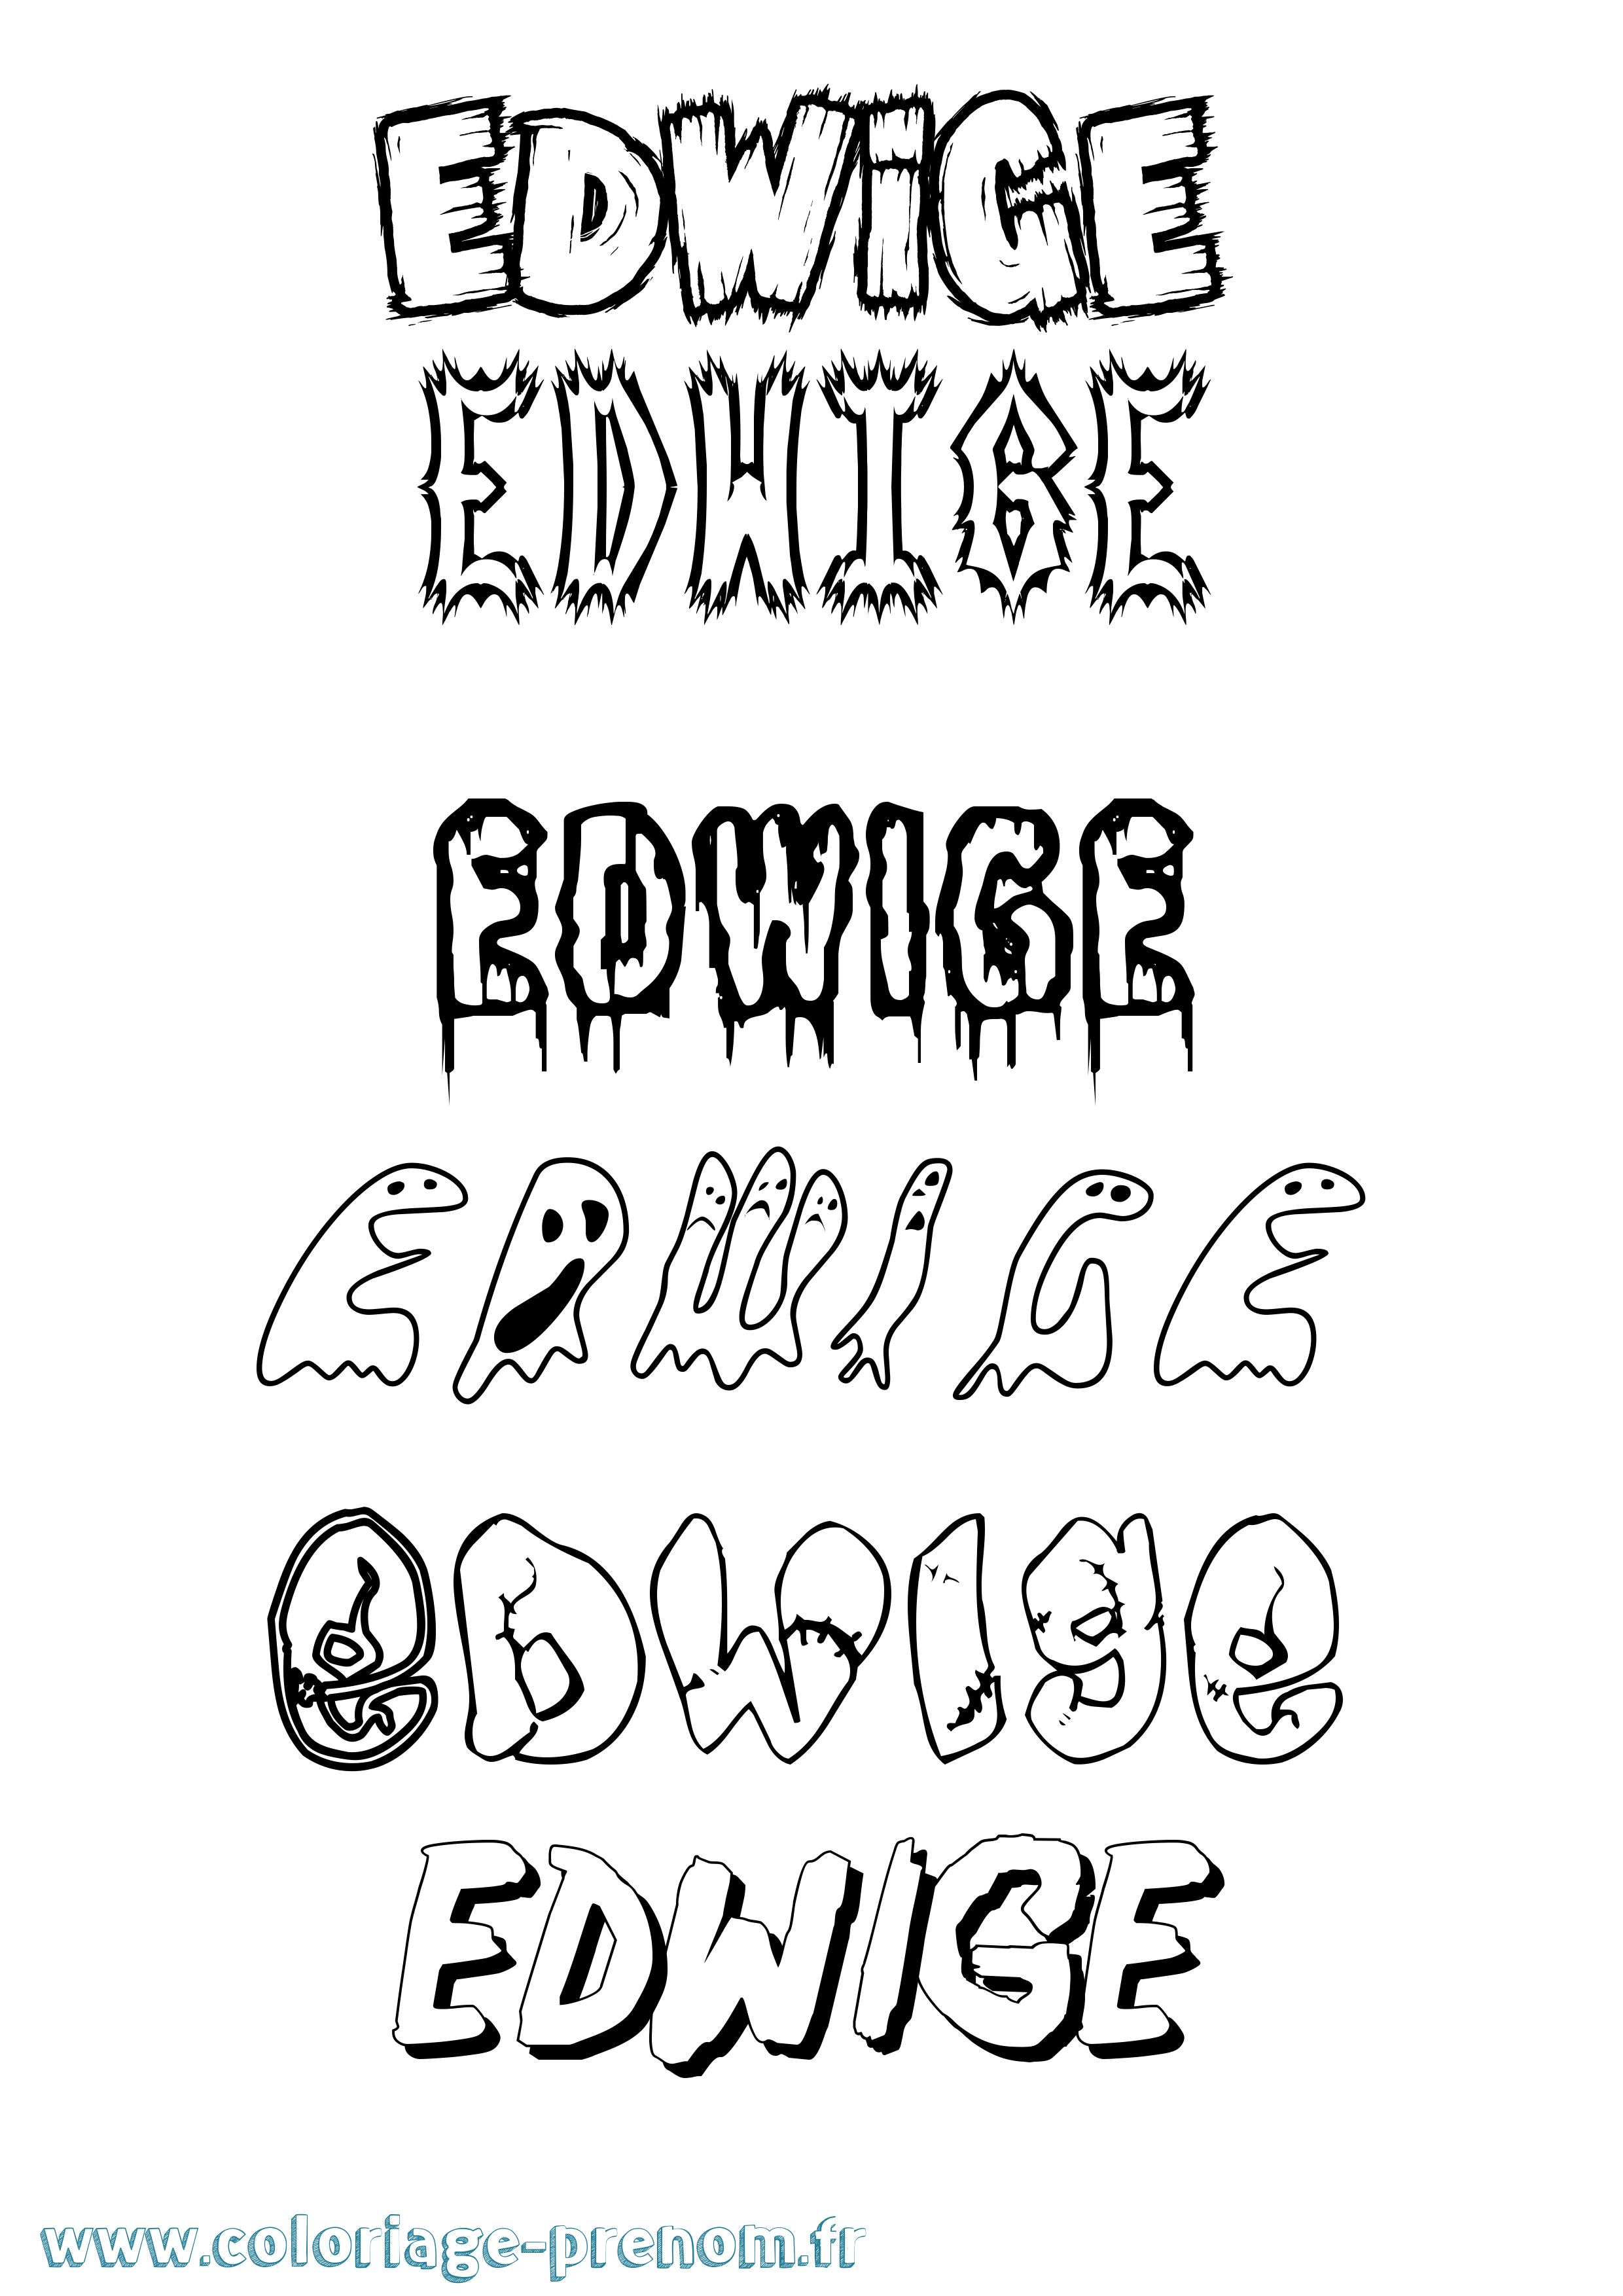 Coloriage prénom Edwige Frisson